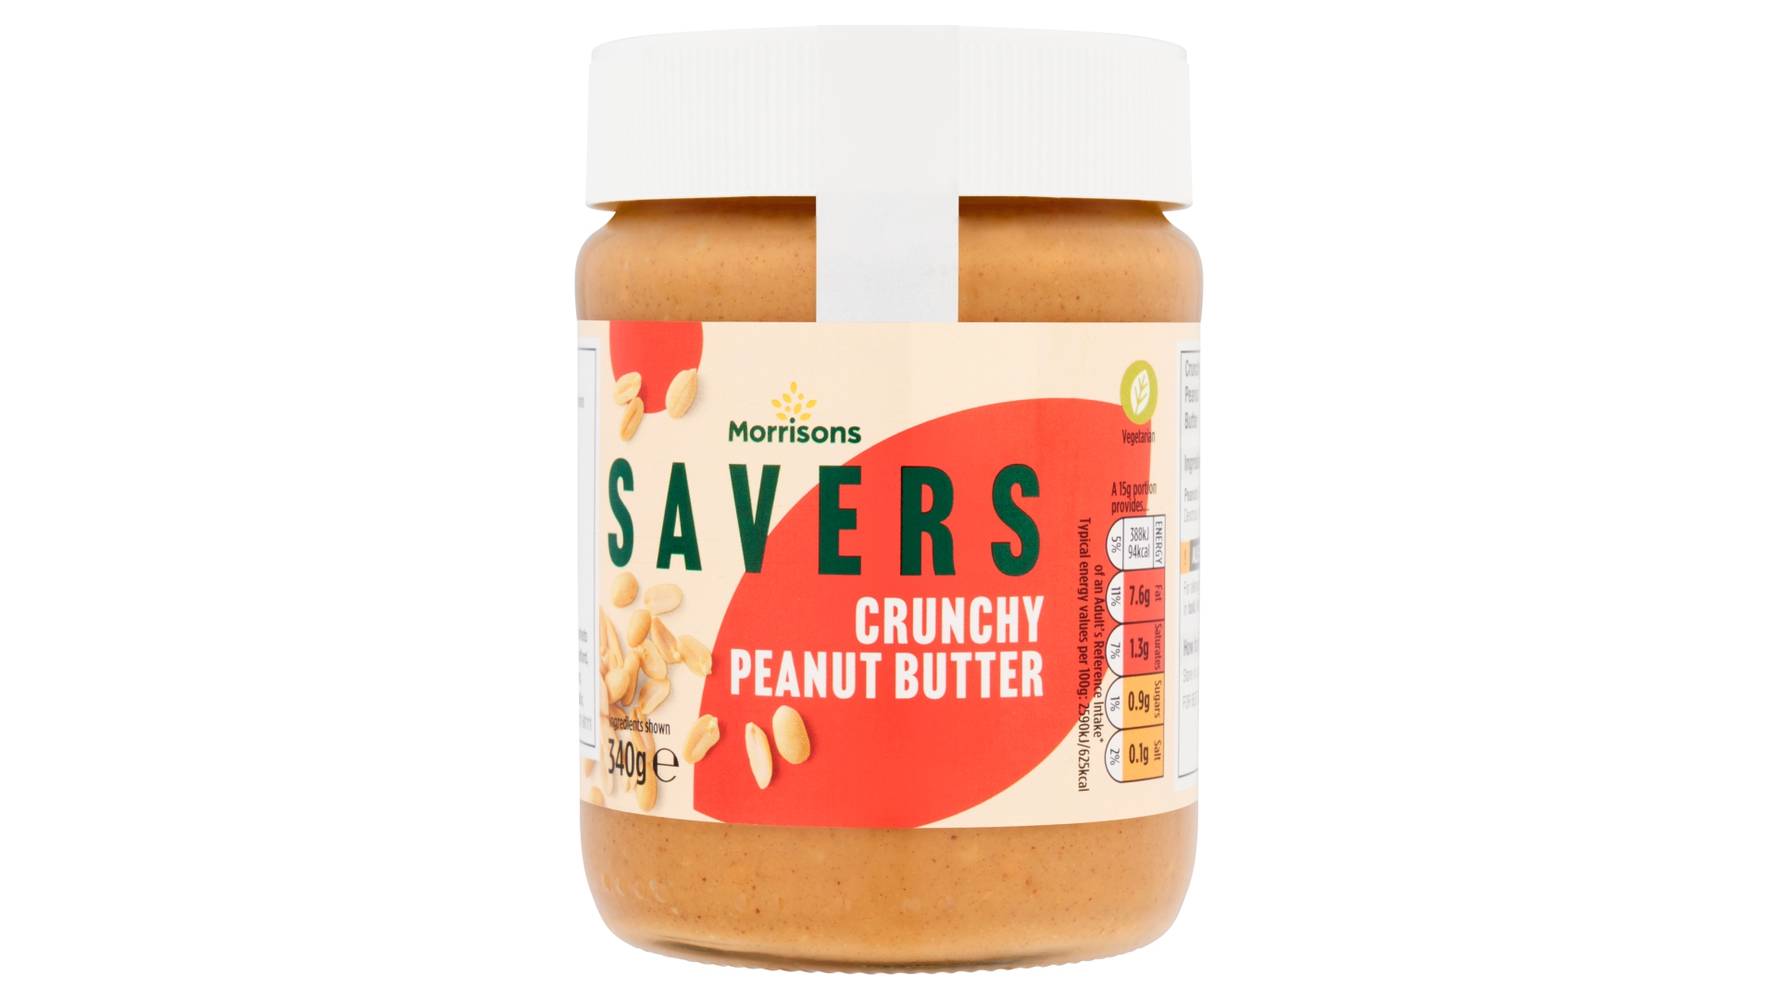 Morrisons Savers Crunchy Peanut Butter